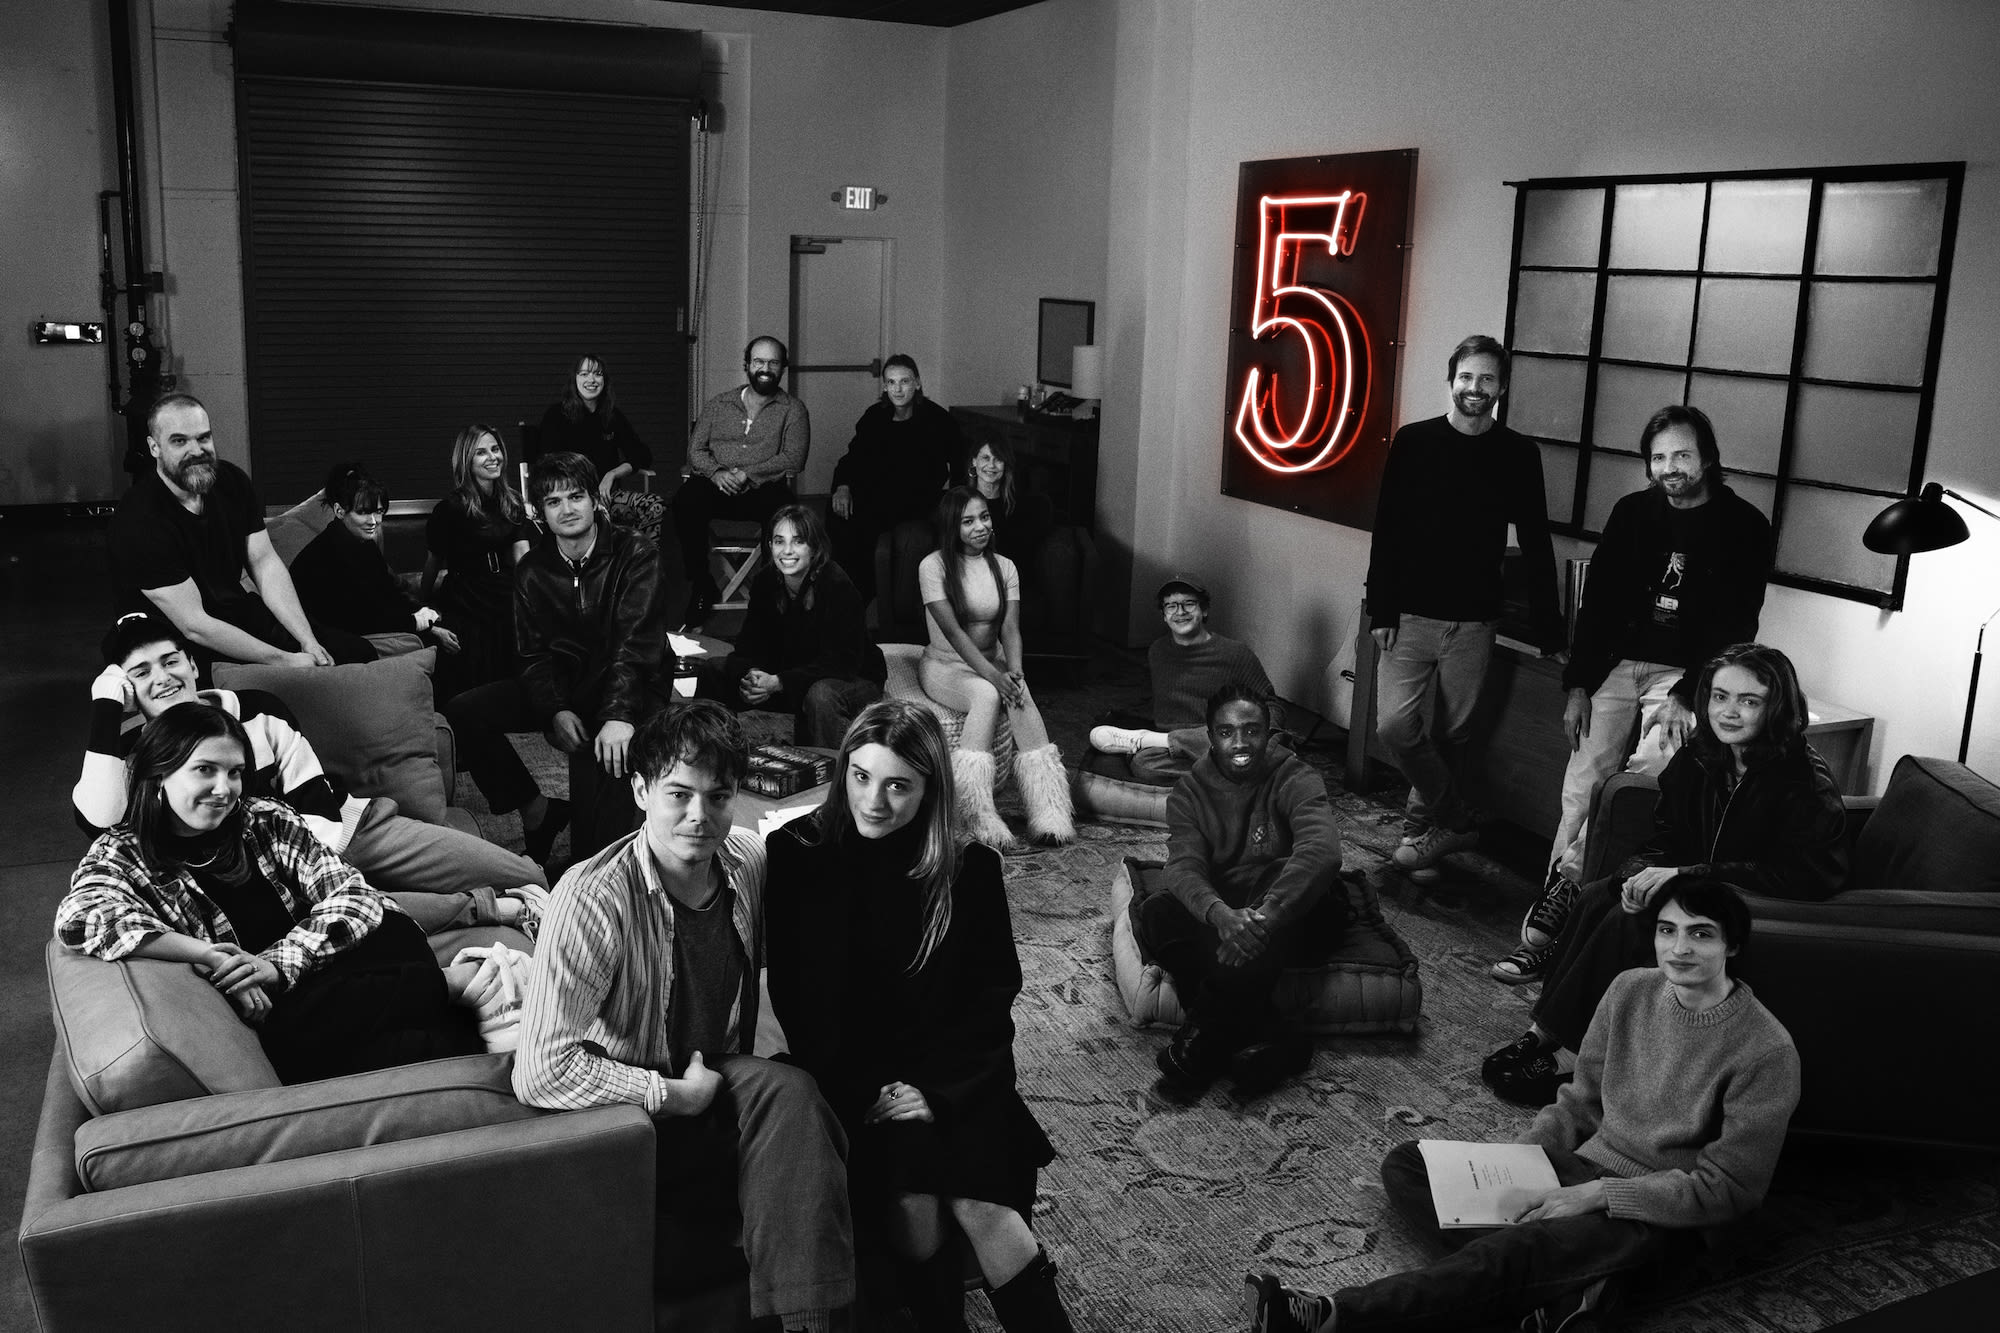 Stranger Things 5 first look teases final season; filming halfway complete